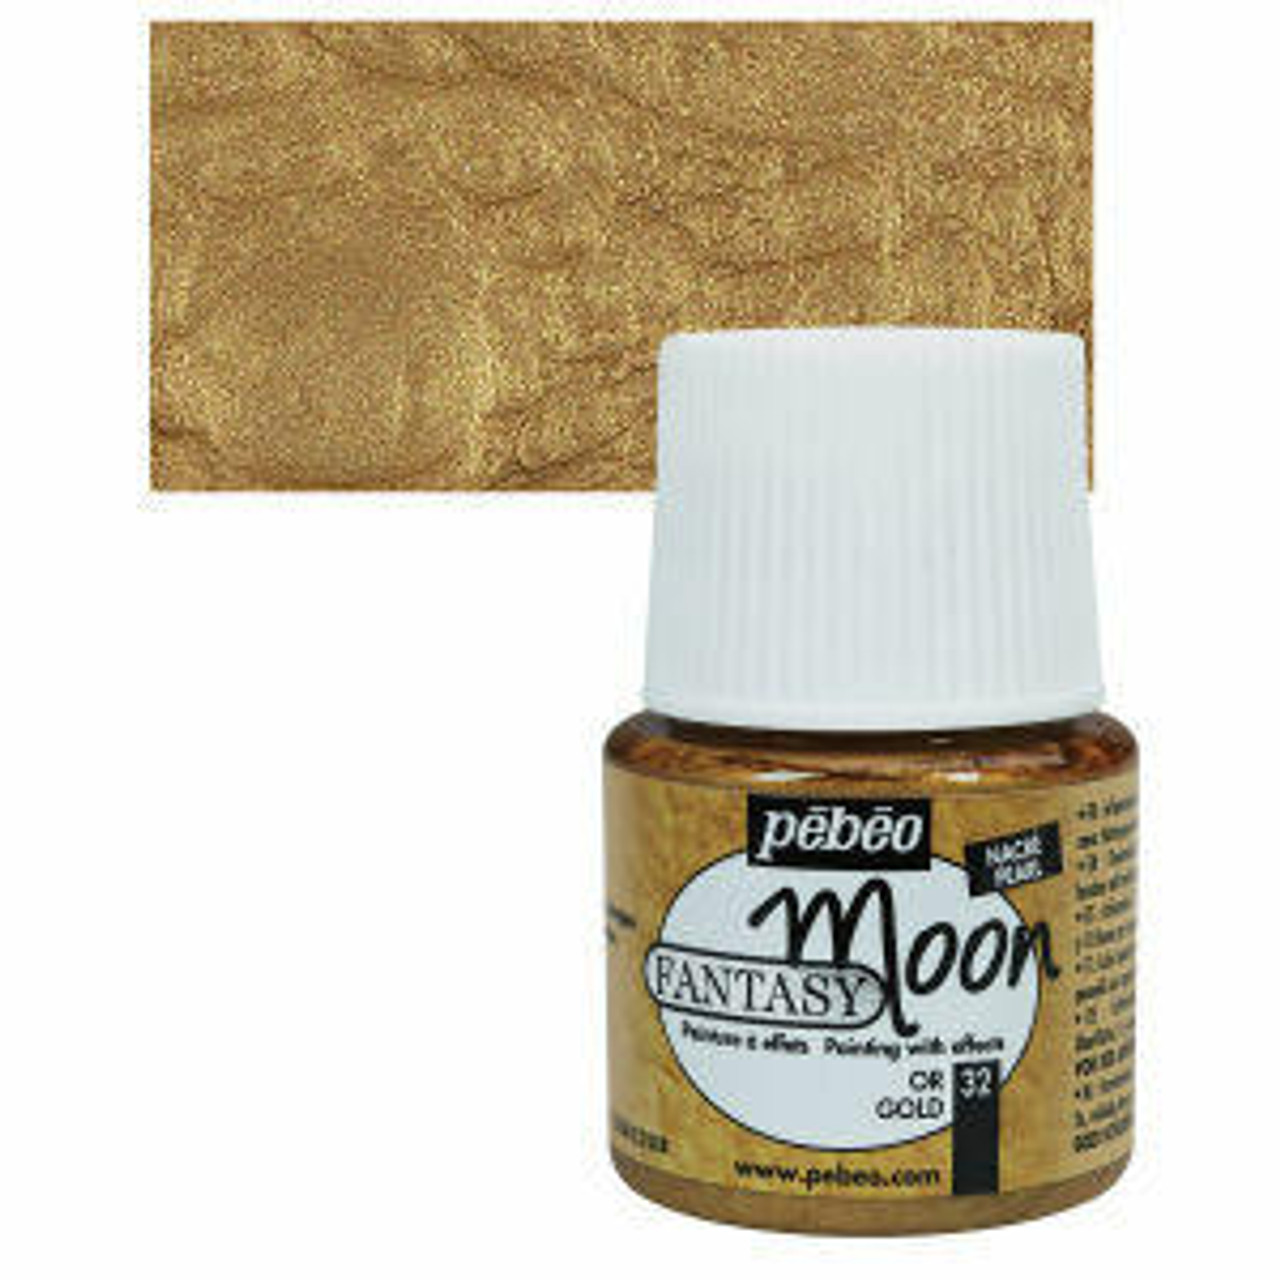 Pebeo Fantasy Moon Paint 45ml Gold